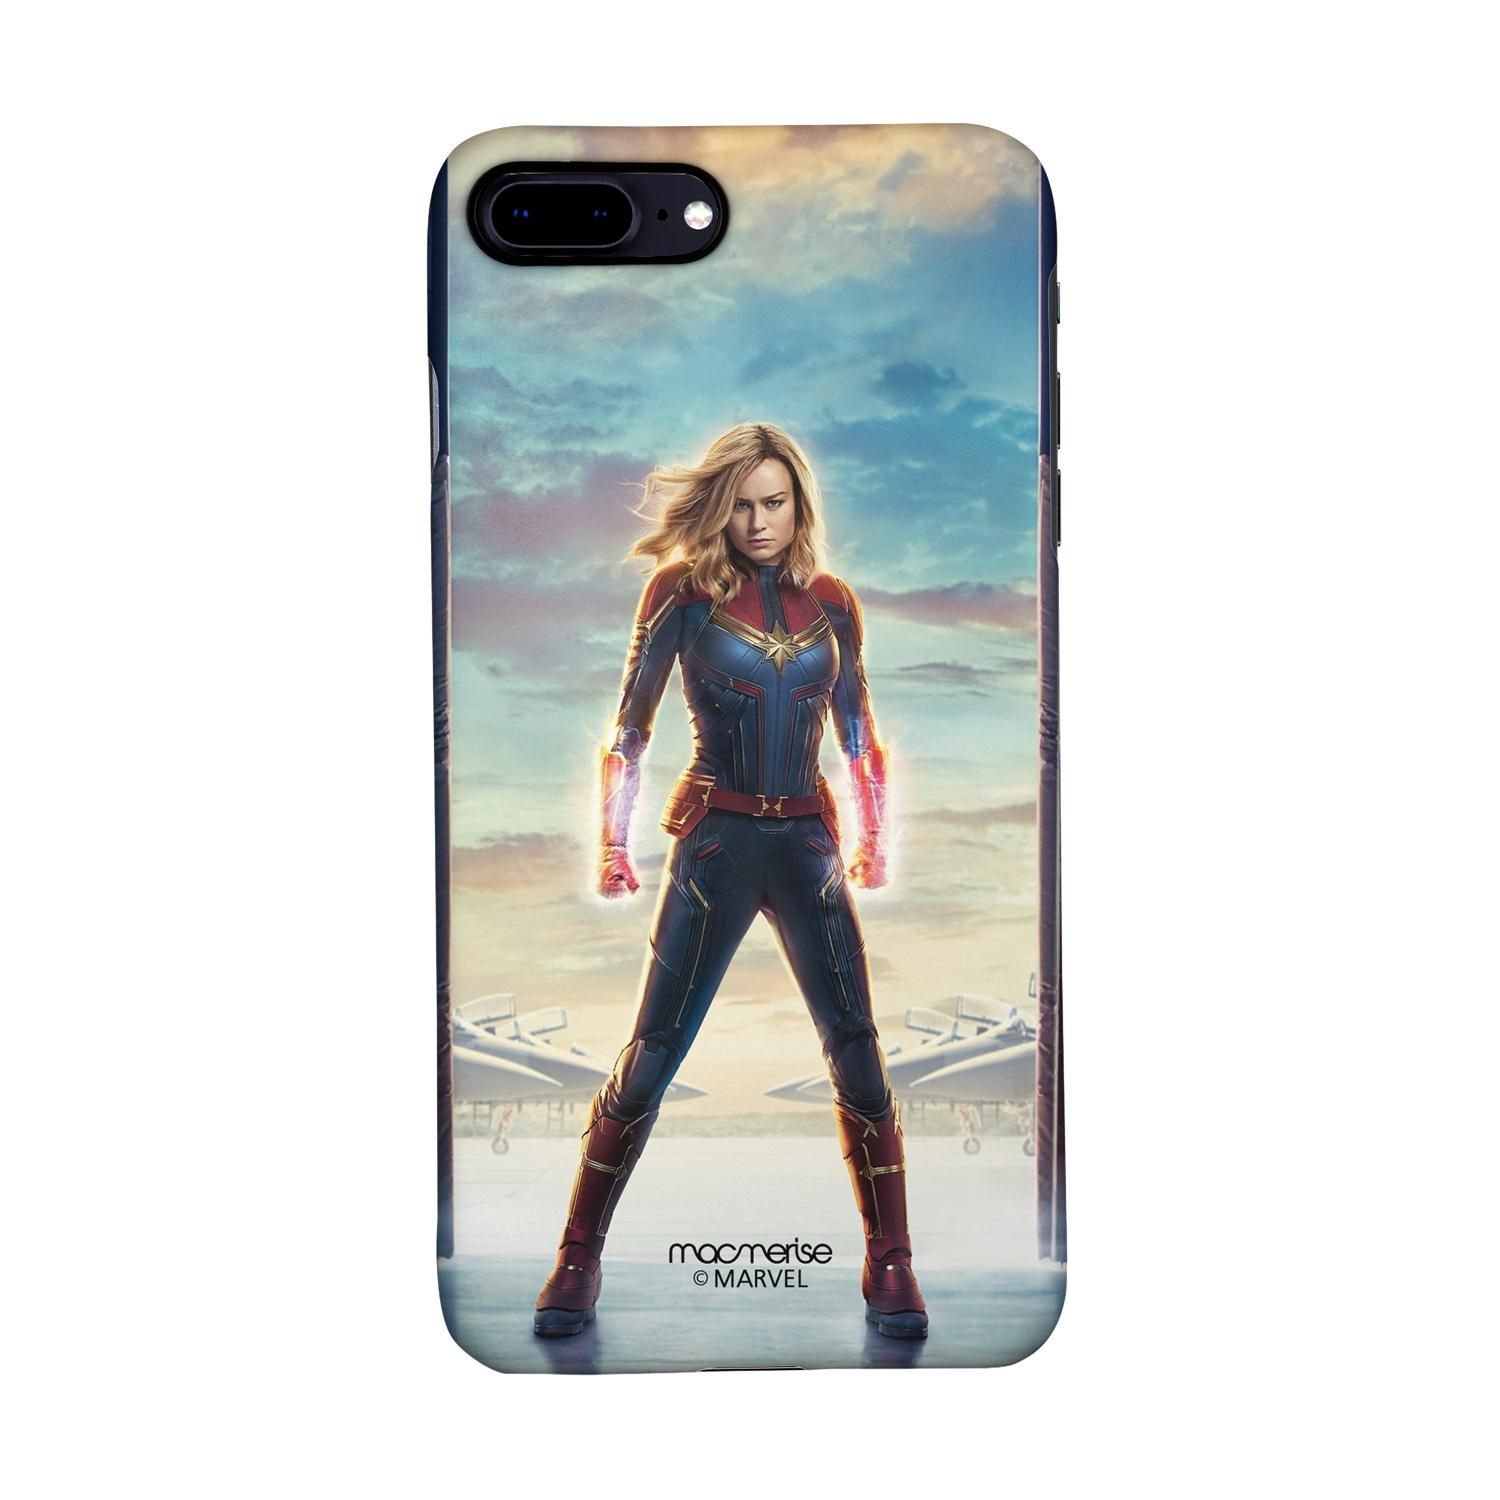 Buy Captain Marvel Poster - Sleek Phone Case for iPhone 8 Plus Online